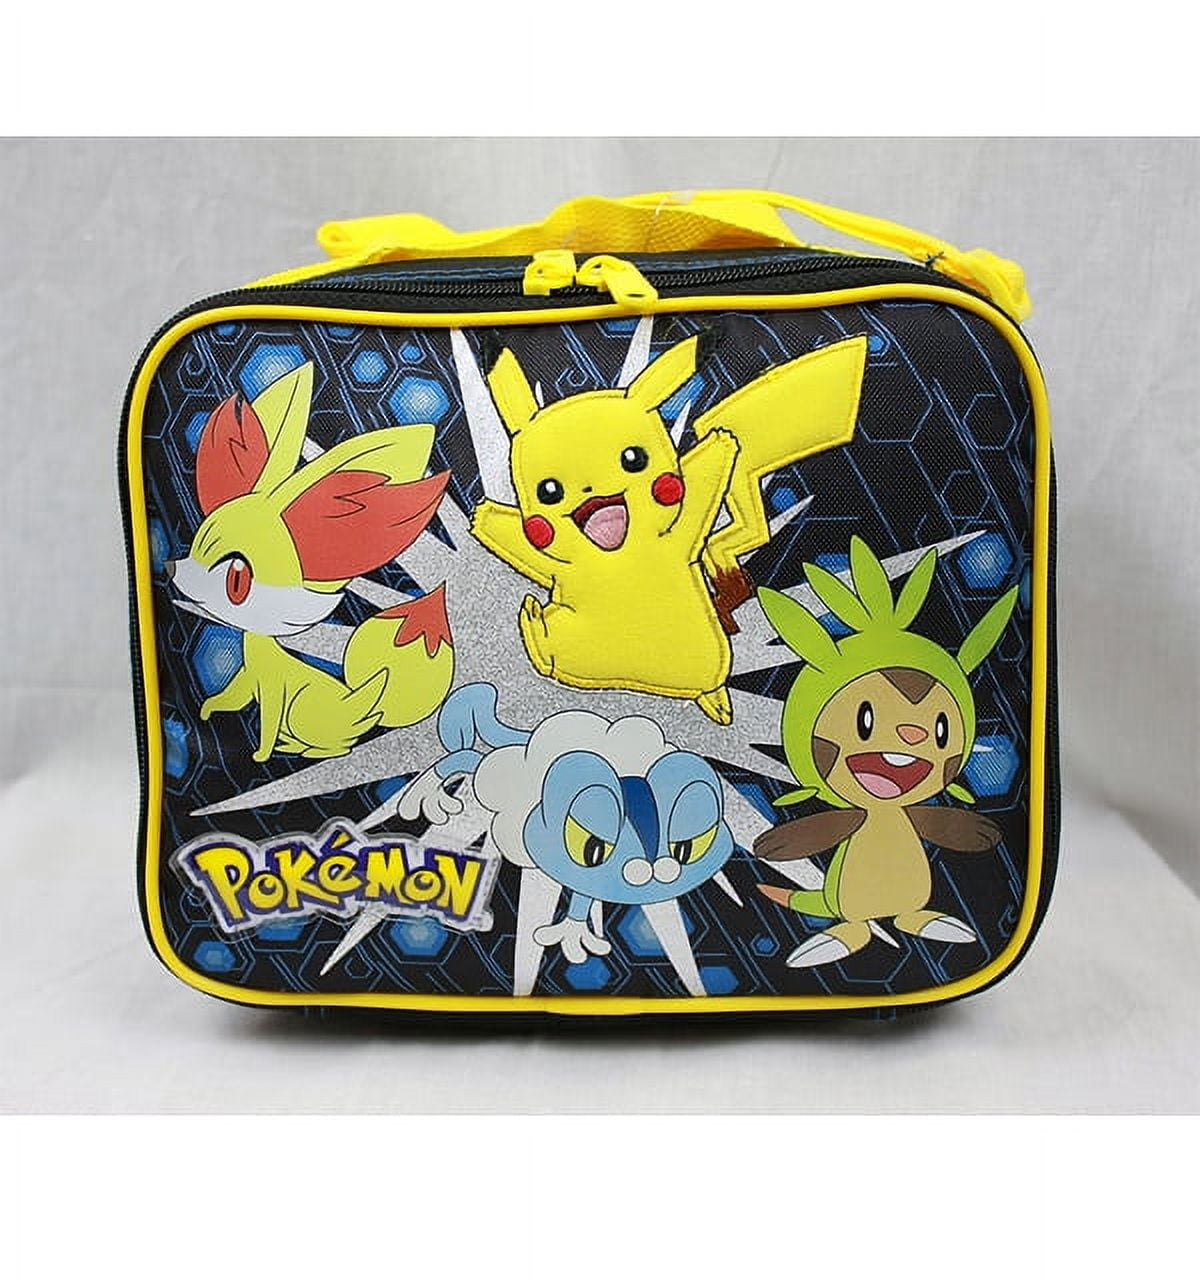  Pokemon Lunch Bag